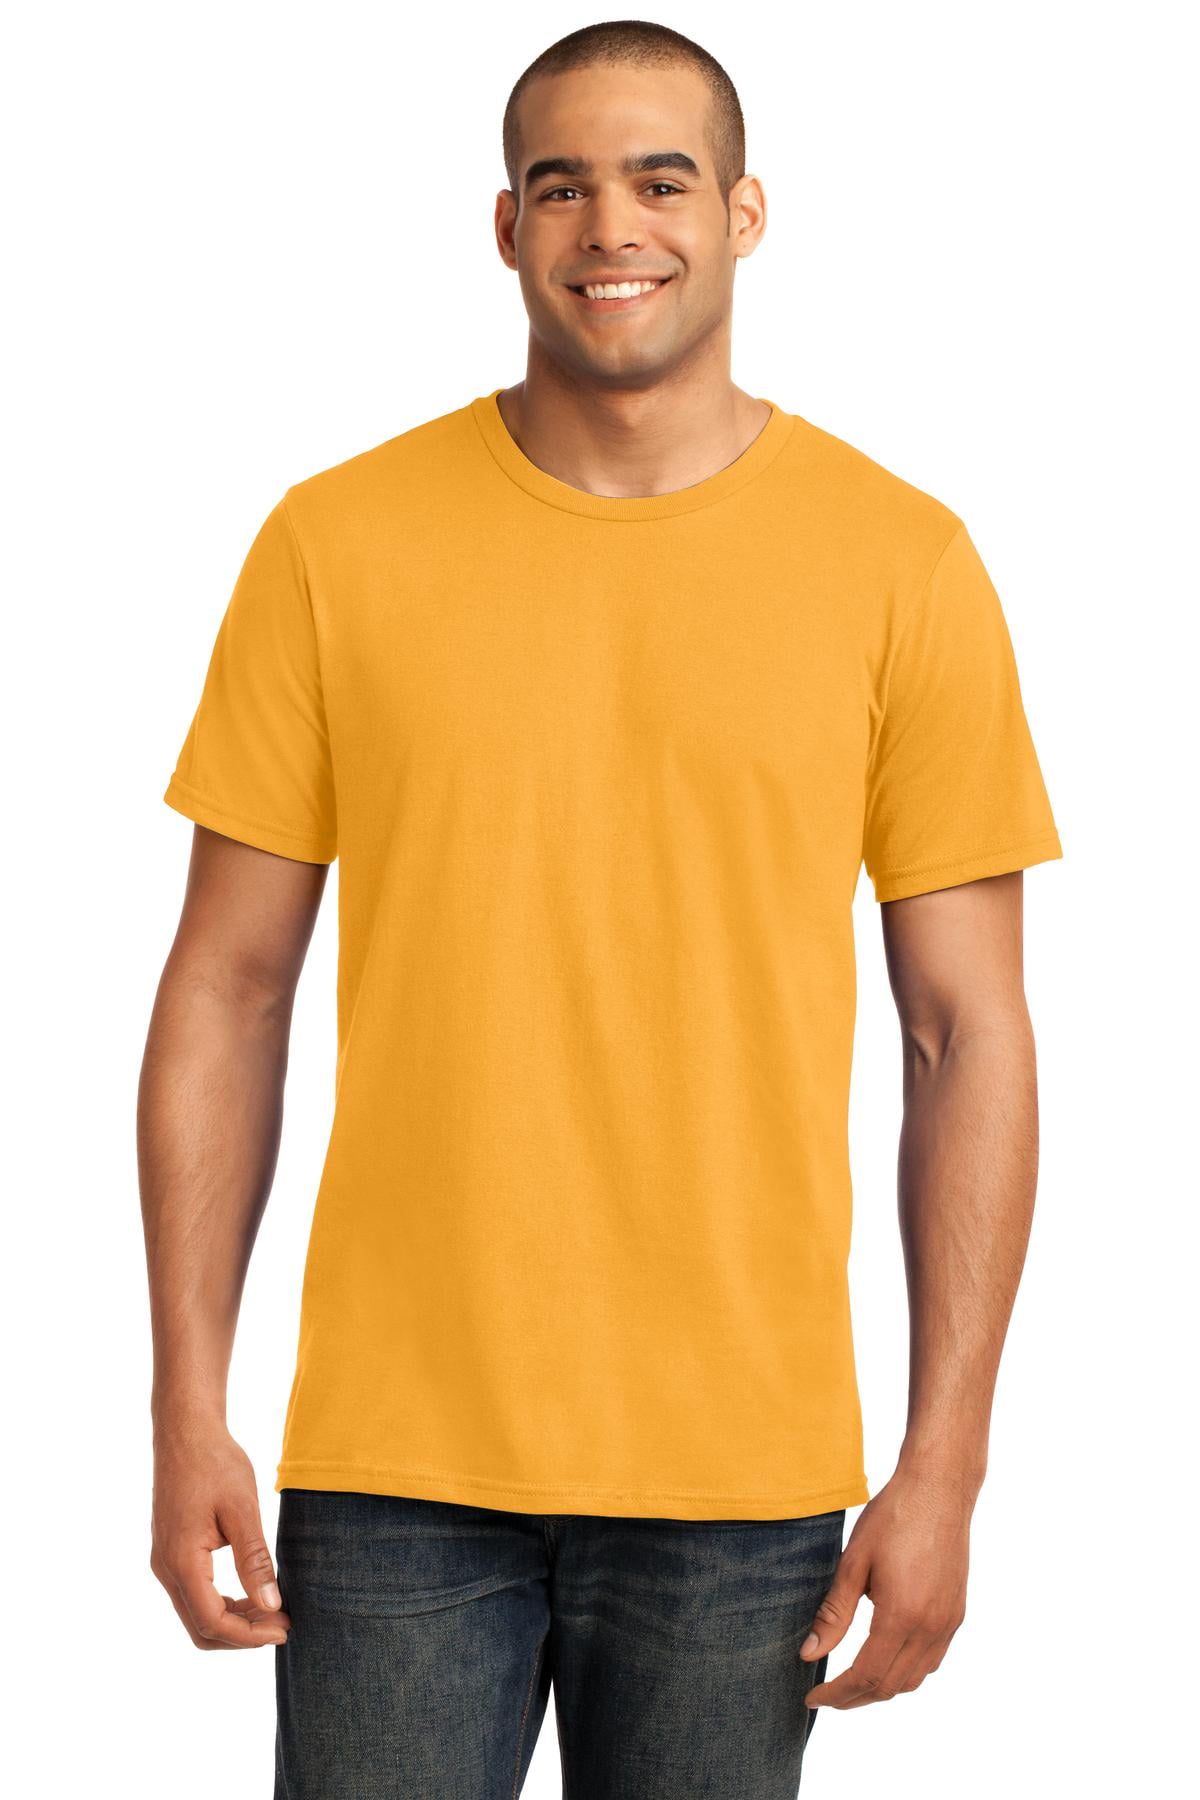 Anvil Men's 100 Percent Ring Spun Cotton T-Shirt. 980 - Walmart.com